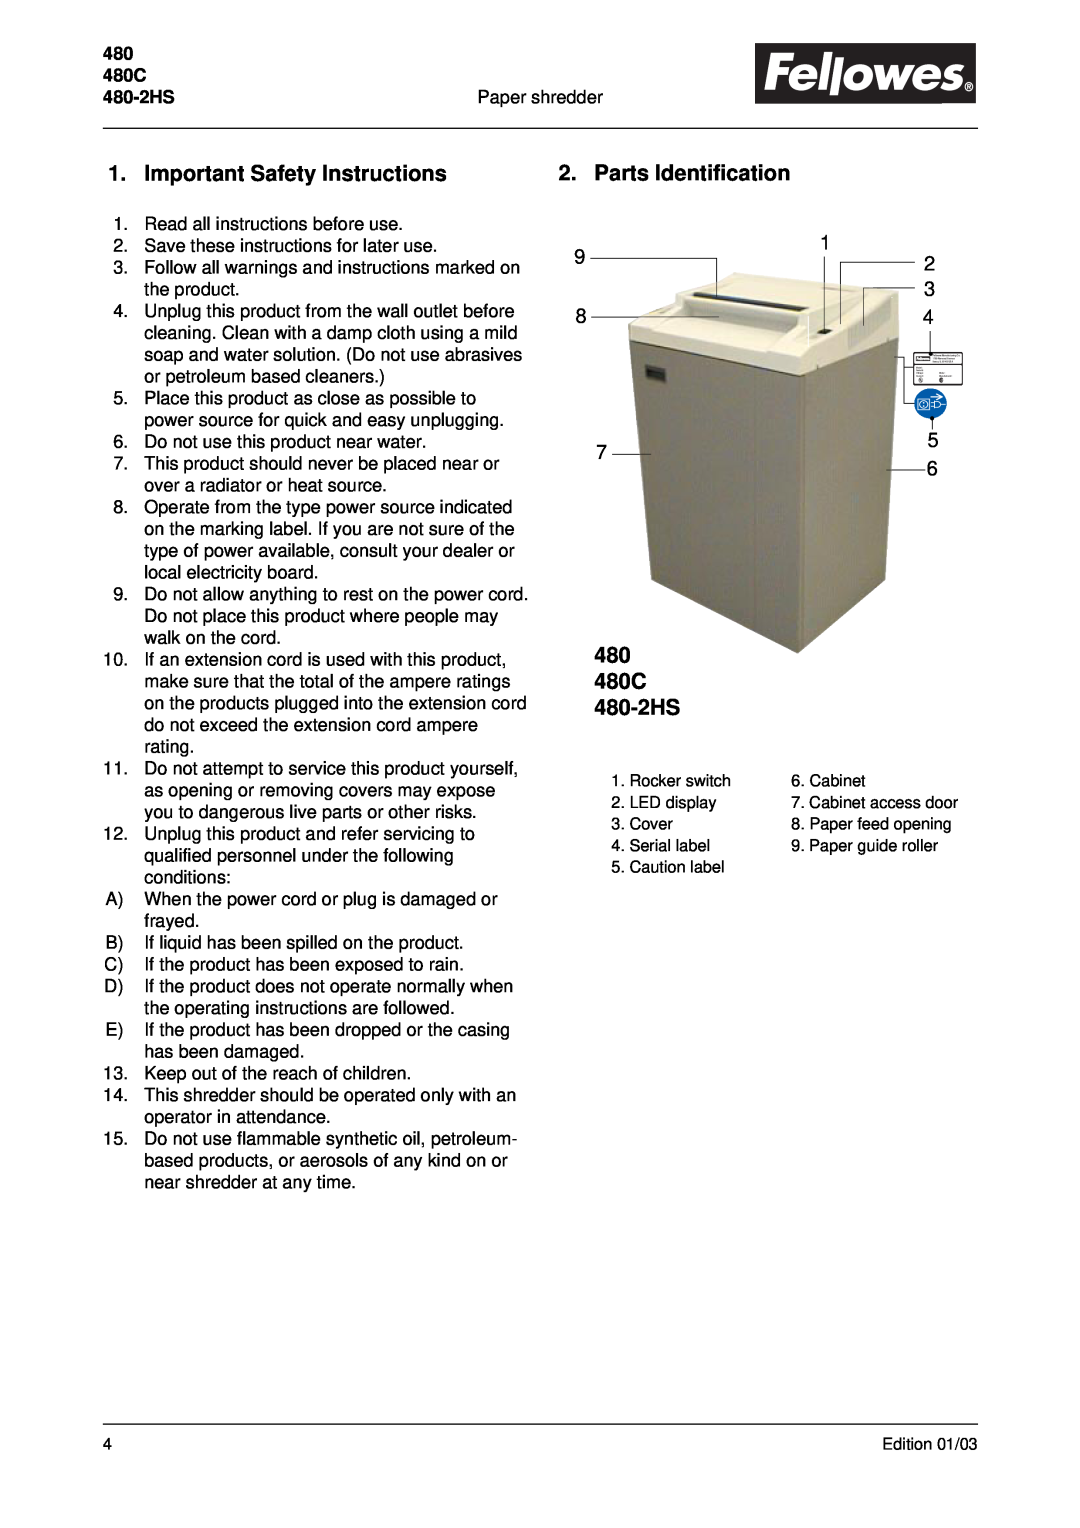 Fellowes C-480C, C-480HS manual Important Safety Instructions, Parts Identification, 480 480C 480-2HS 